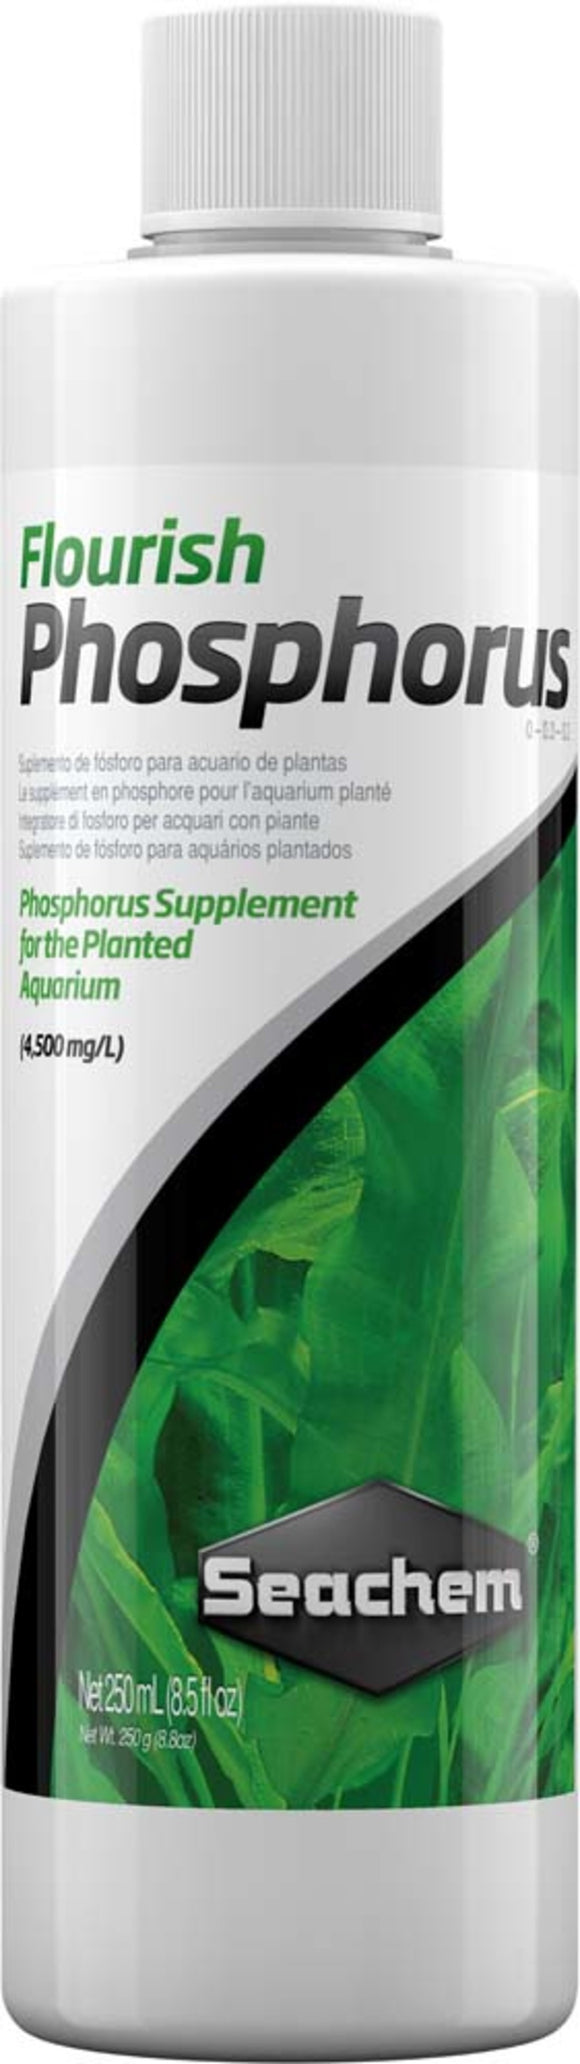 Flourish Phosphorus 250ML